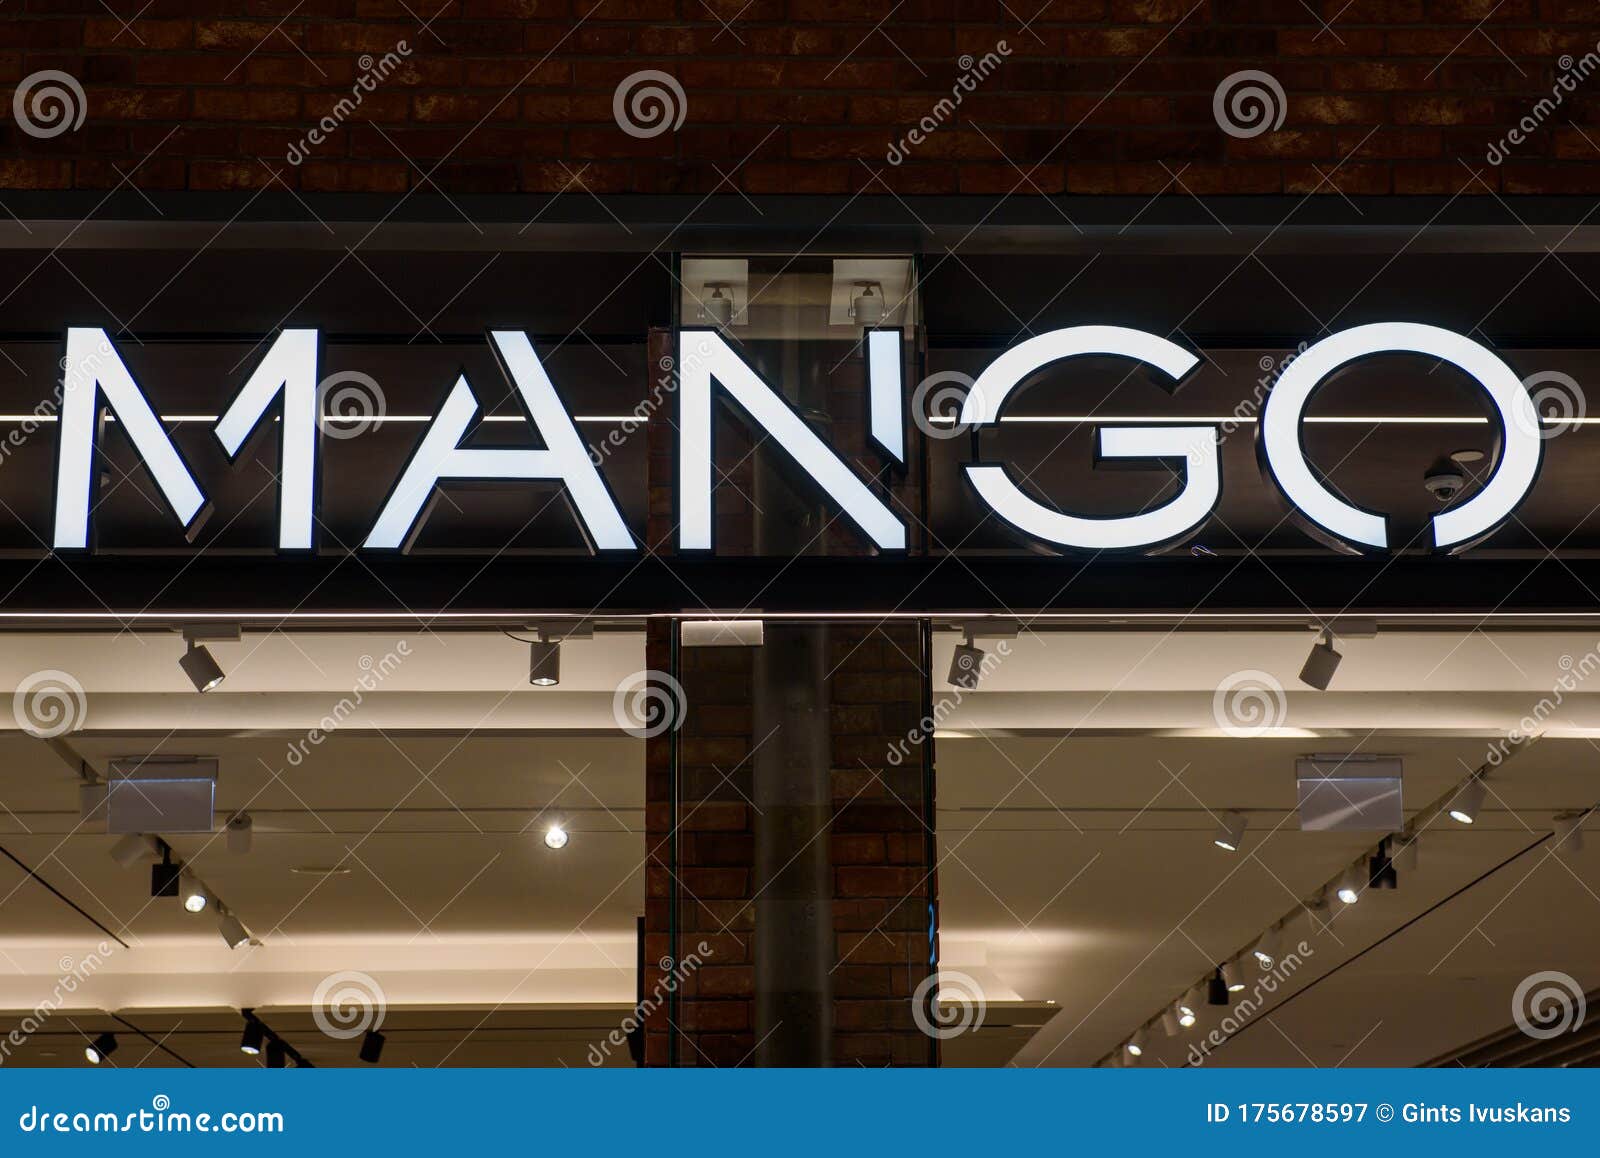 491 Mango Clothing Photos Free Royalty Free Stock Photos From Dreamstime